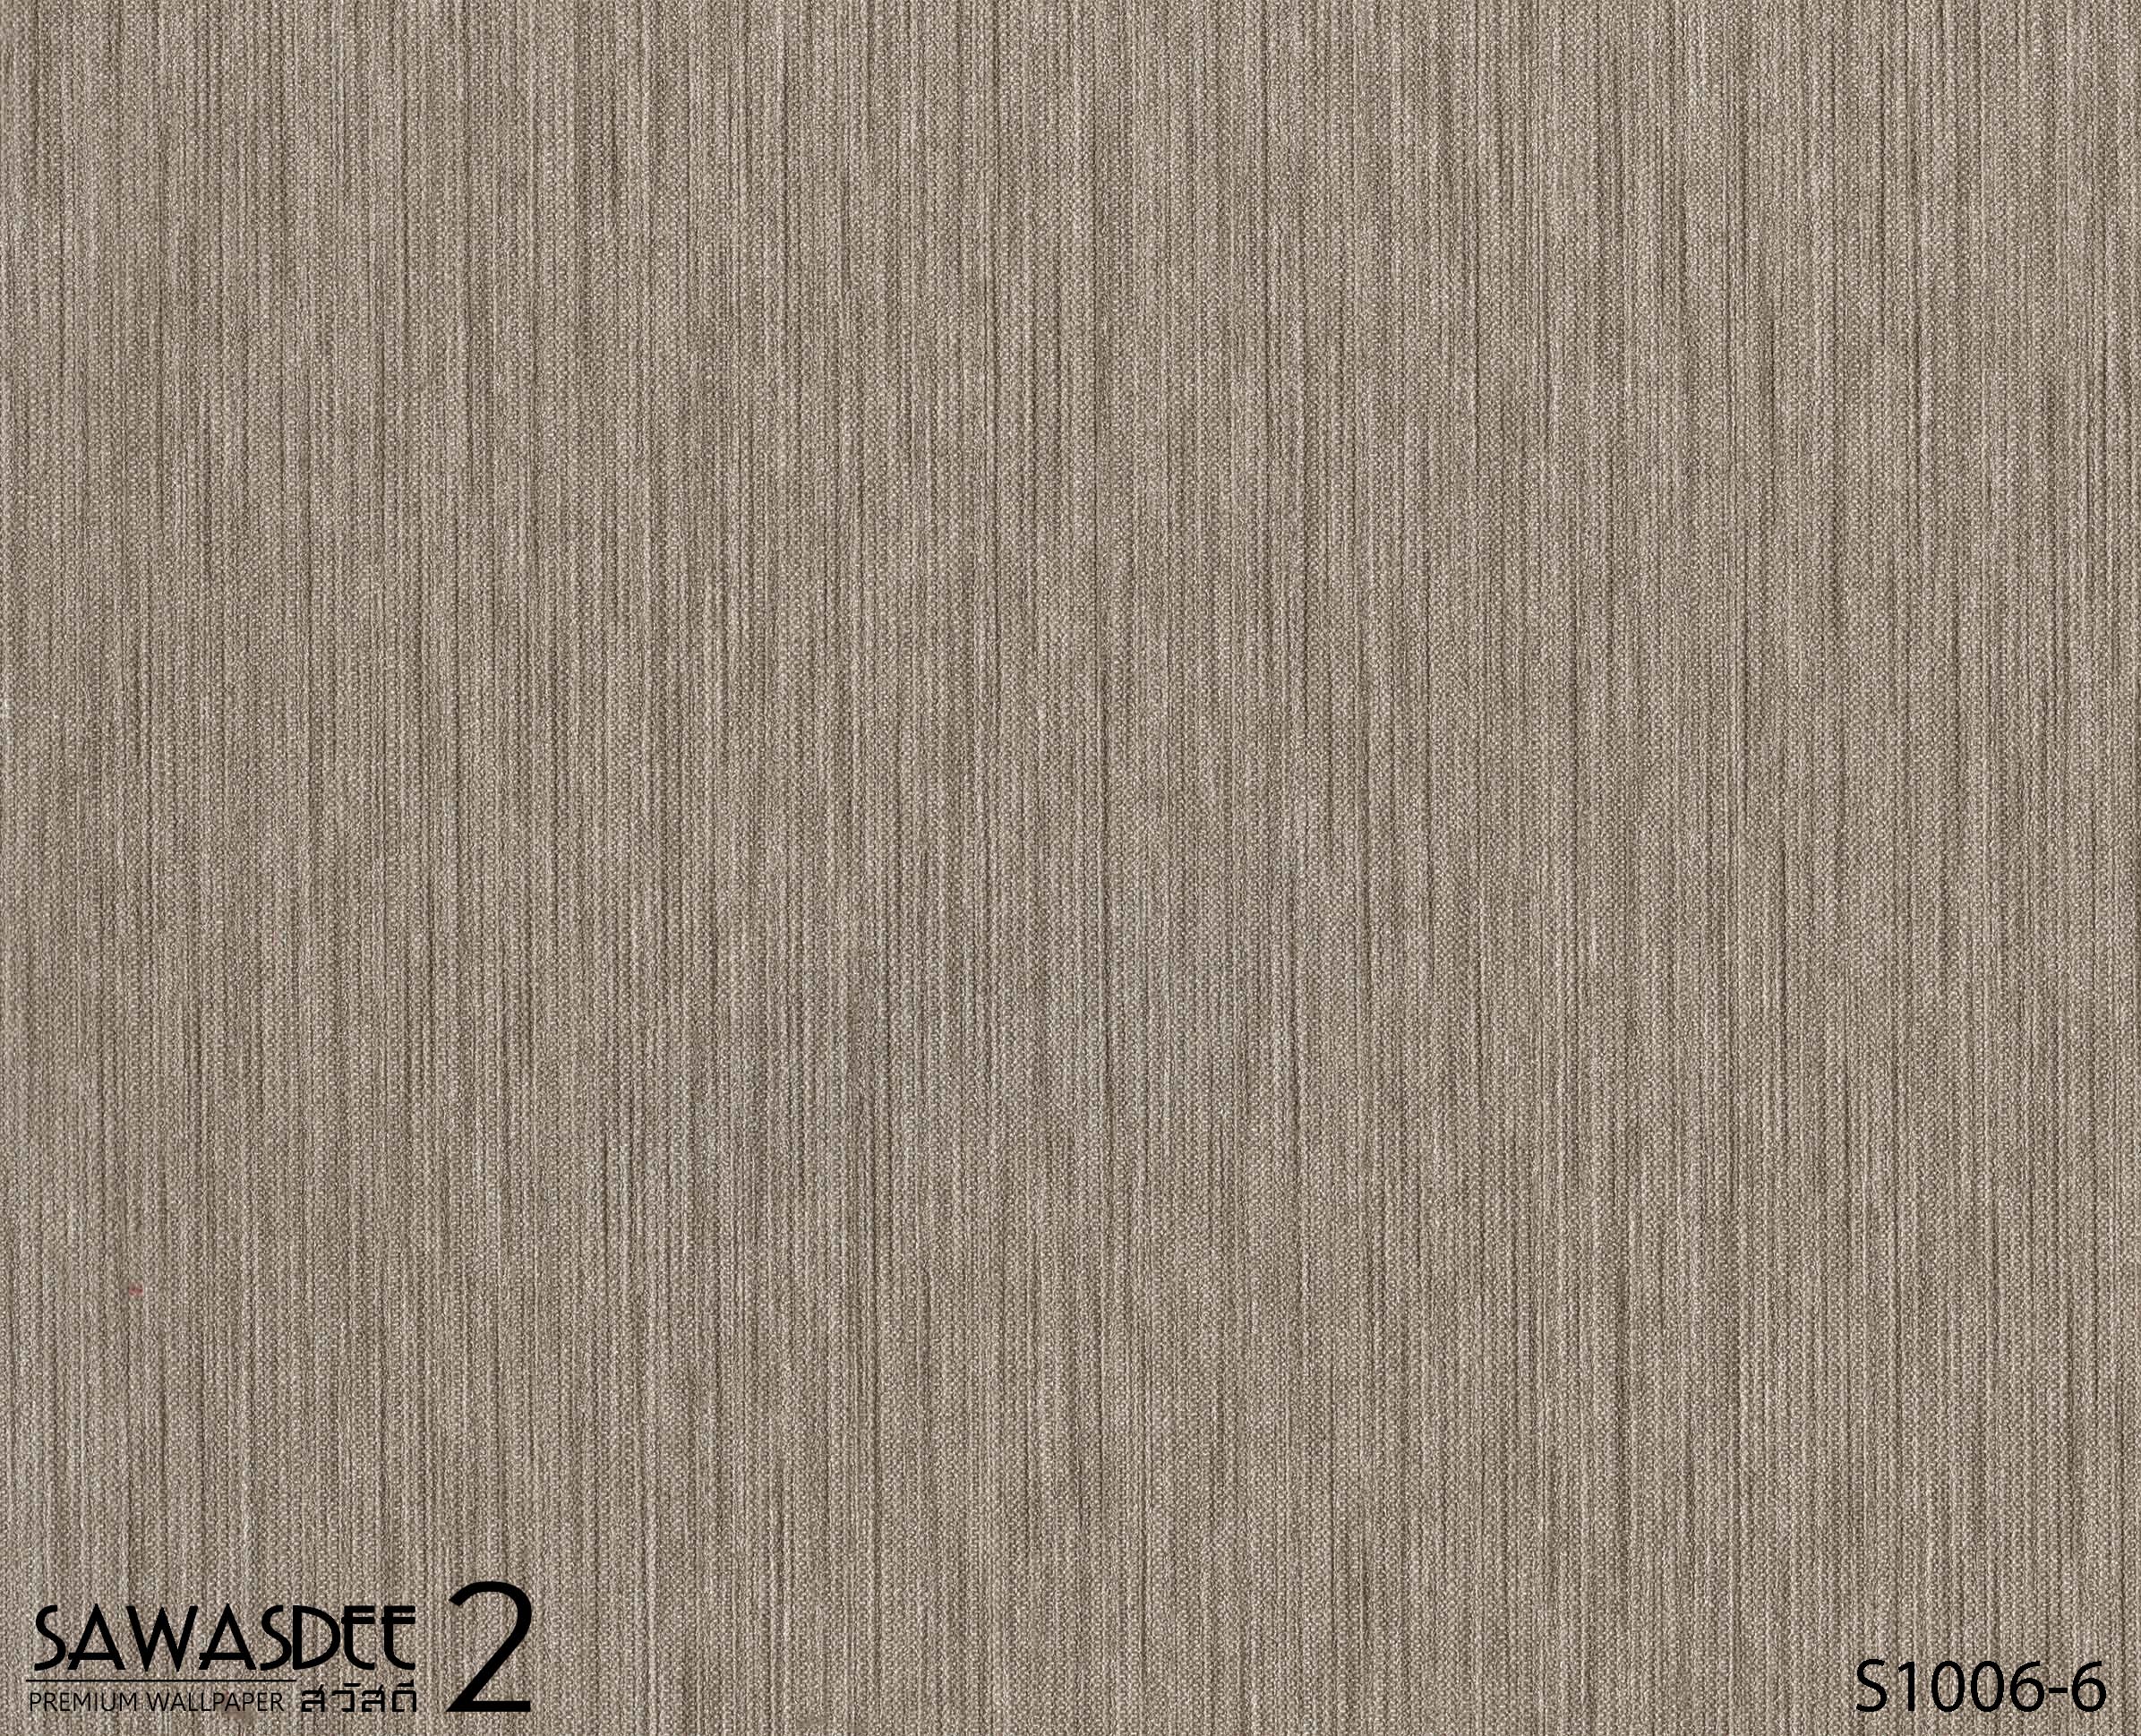 Wallpaper (SAWASDEE 2) S1006-6